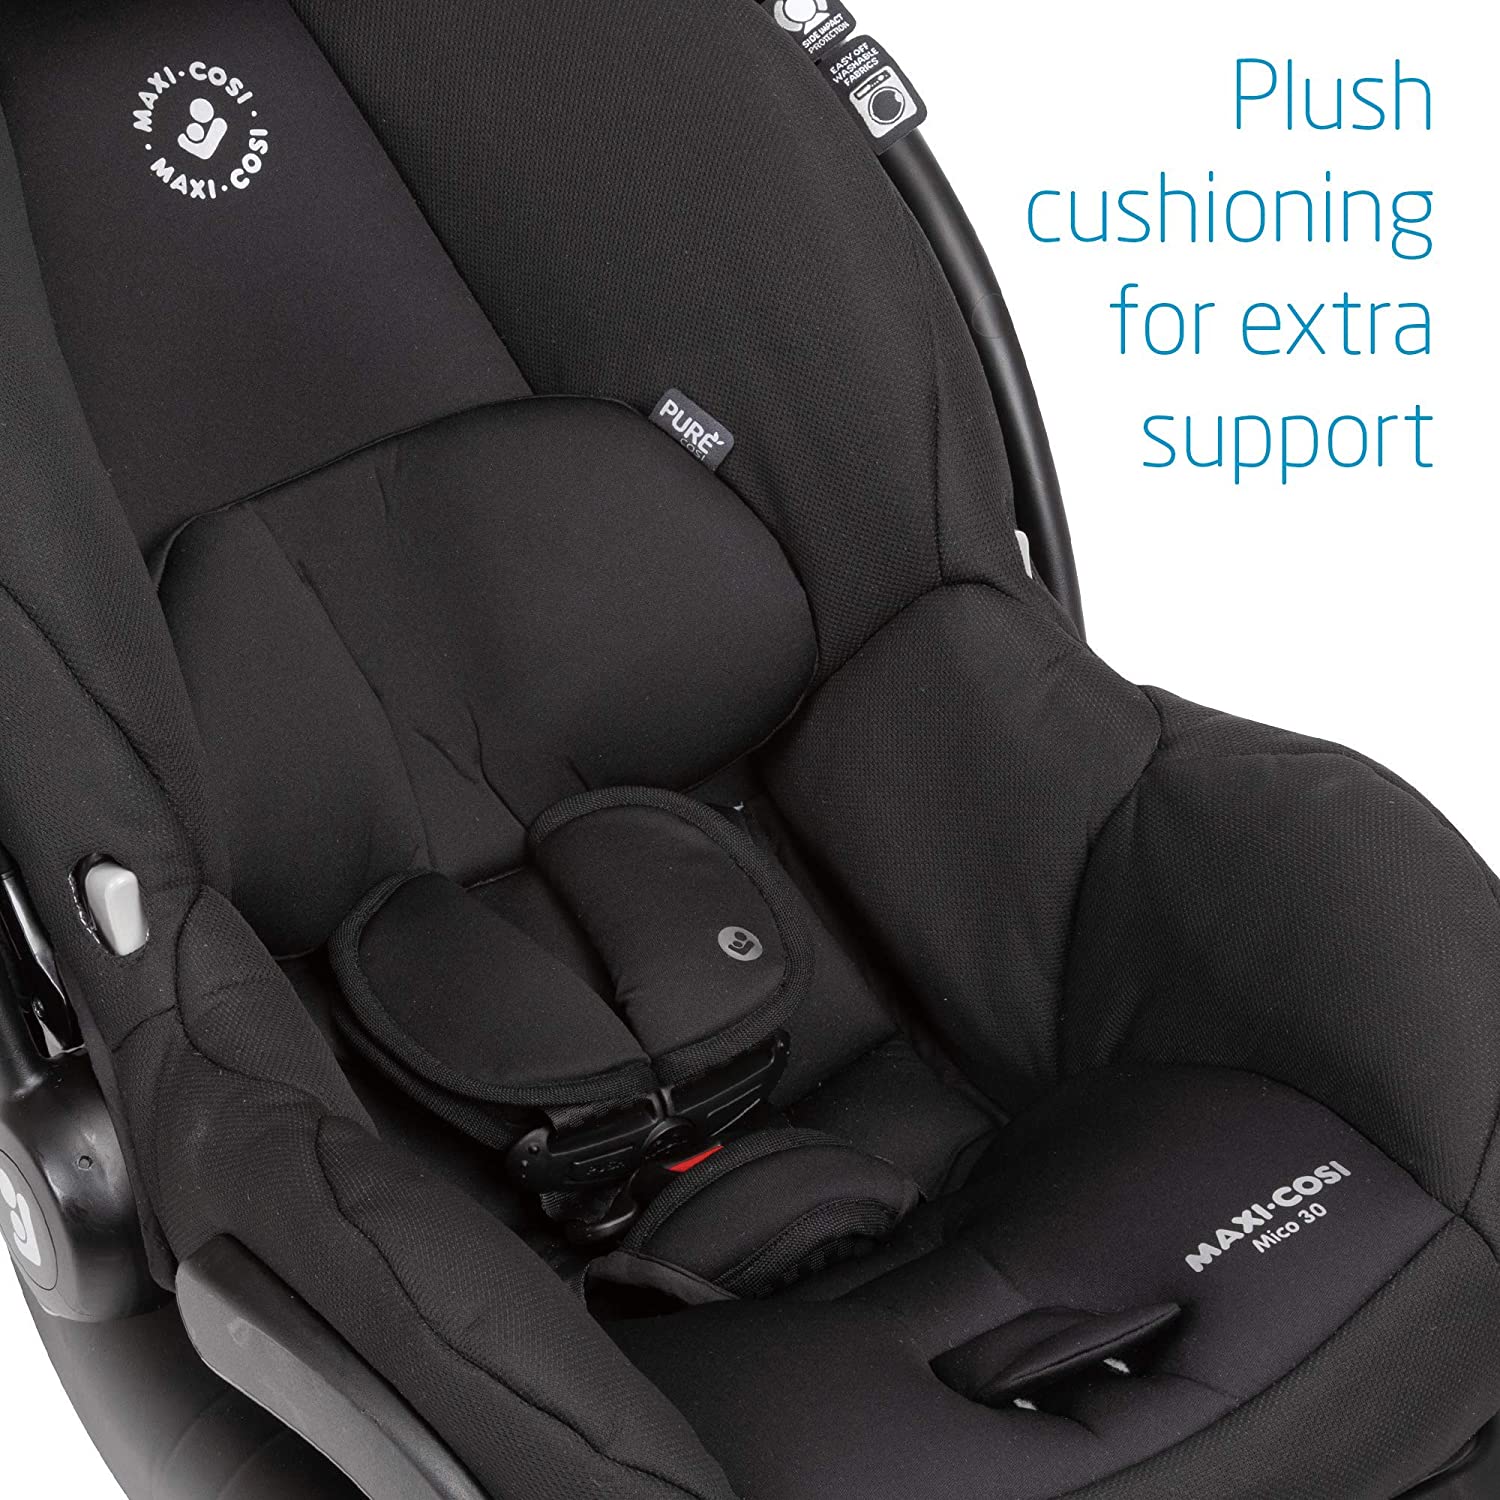 Maxi Cosi Mico 30 Infant Car Seat Pure Cosi - ANB Baby -$100 - $300